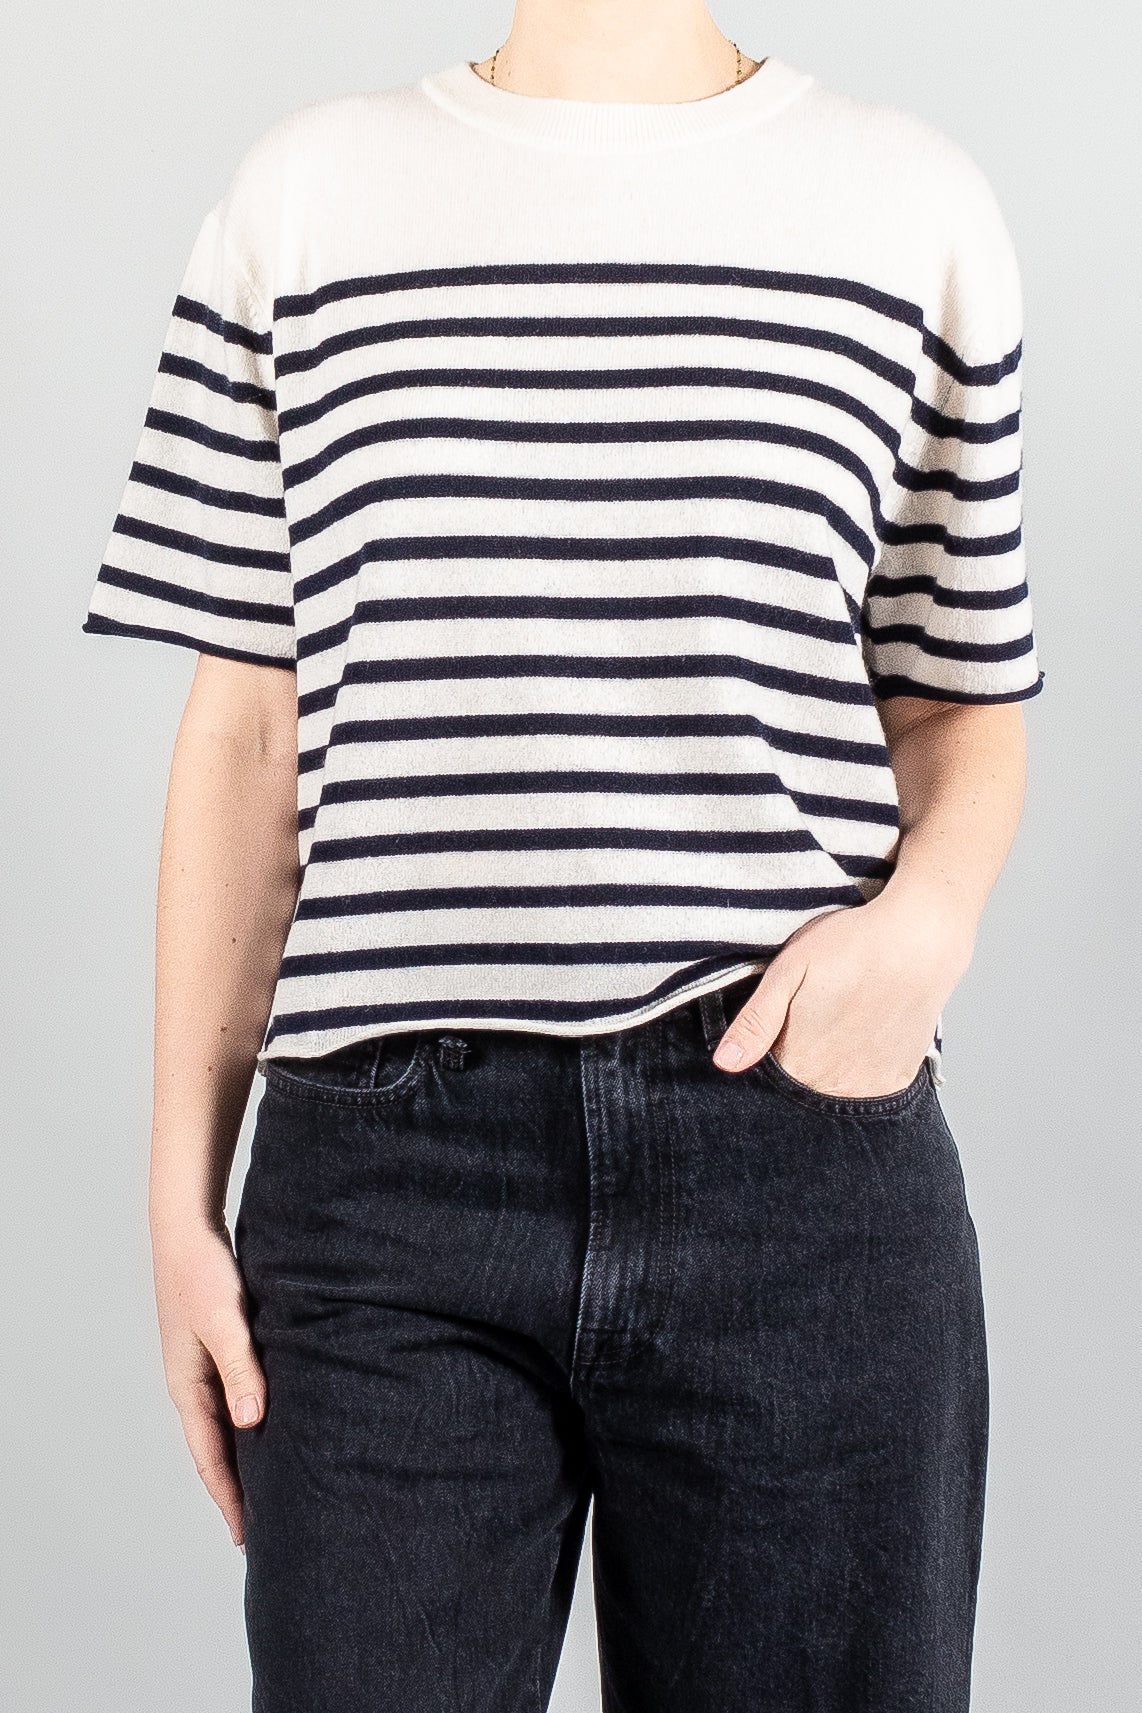 Lisa Yang Cila Stripes T-shirt